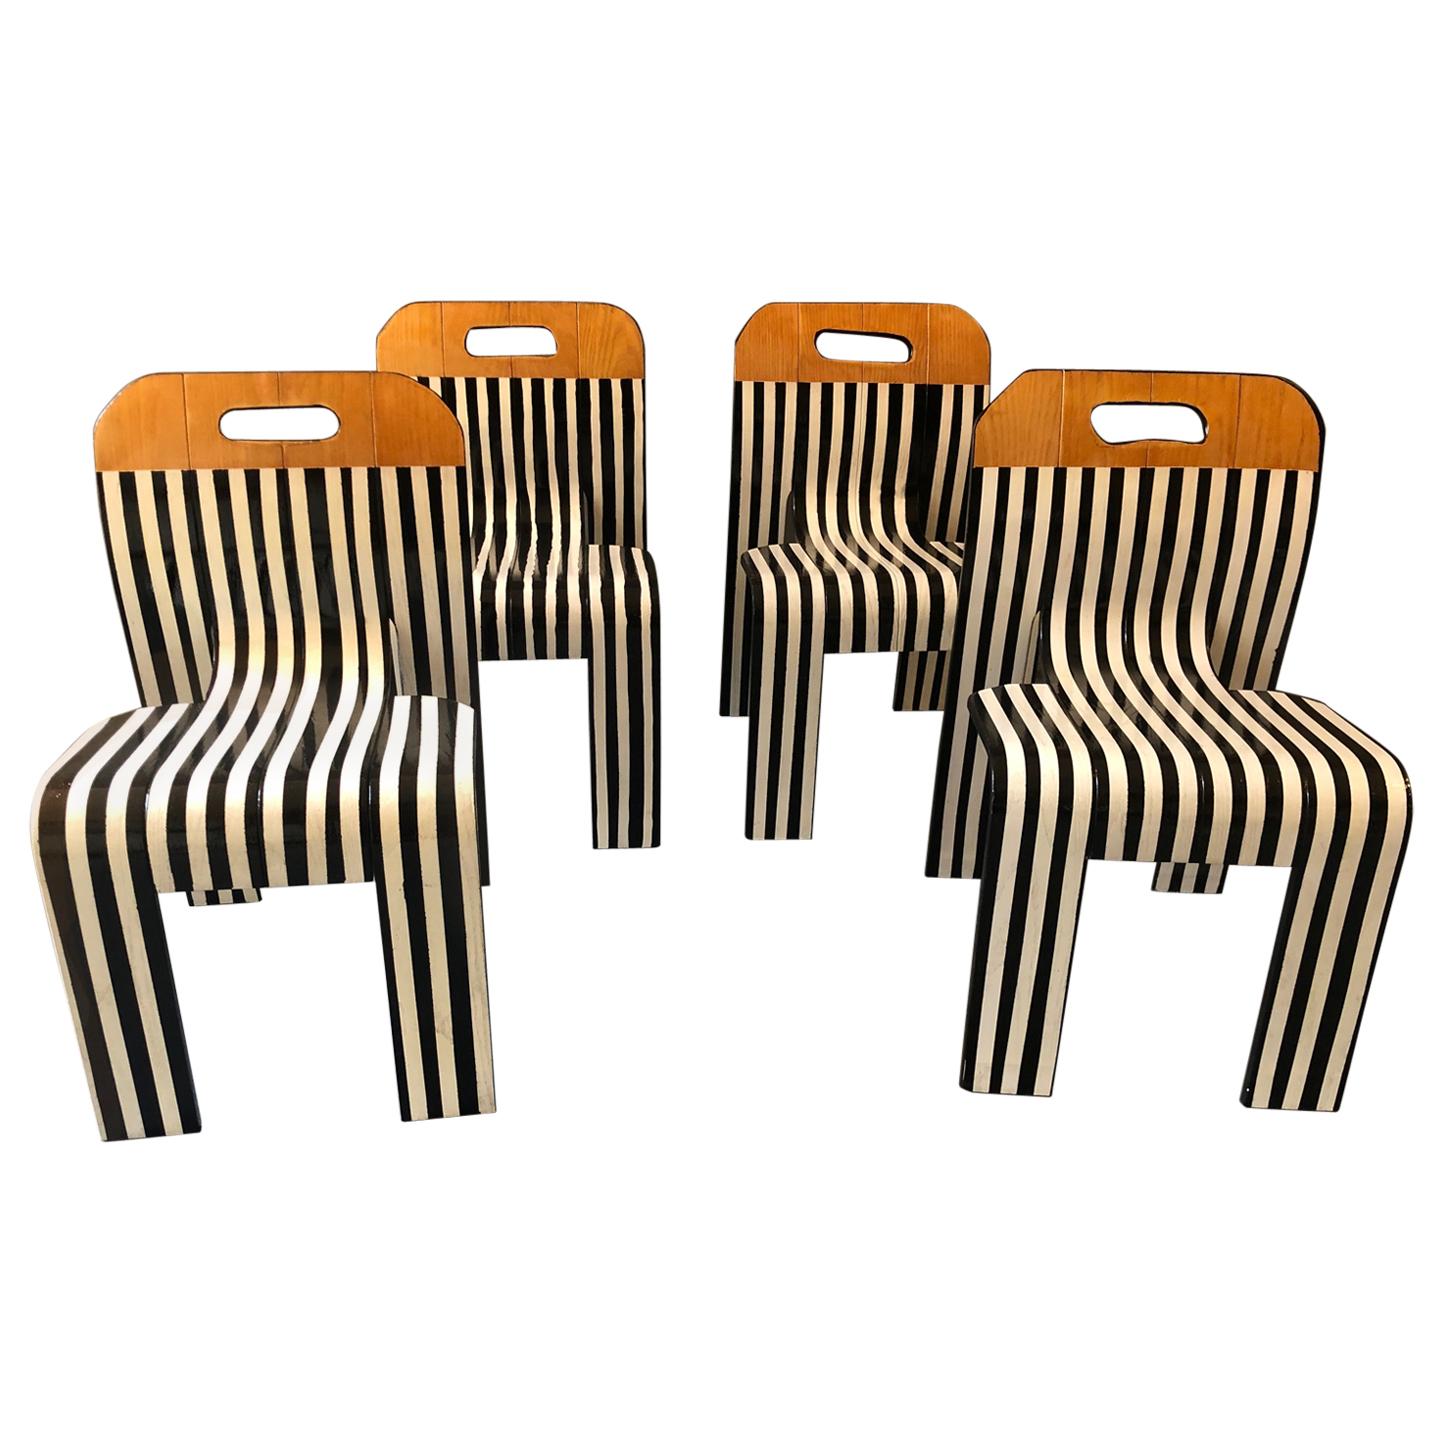 Strip Chair, Gijs Bakker for Castelijn, contemporized in B & W by Atelier Staab For Sale